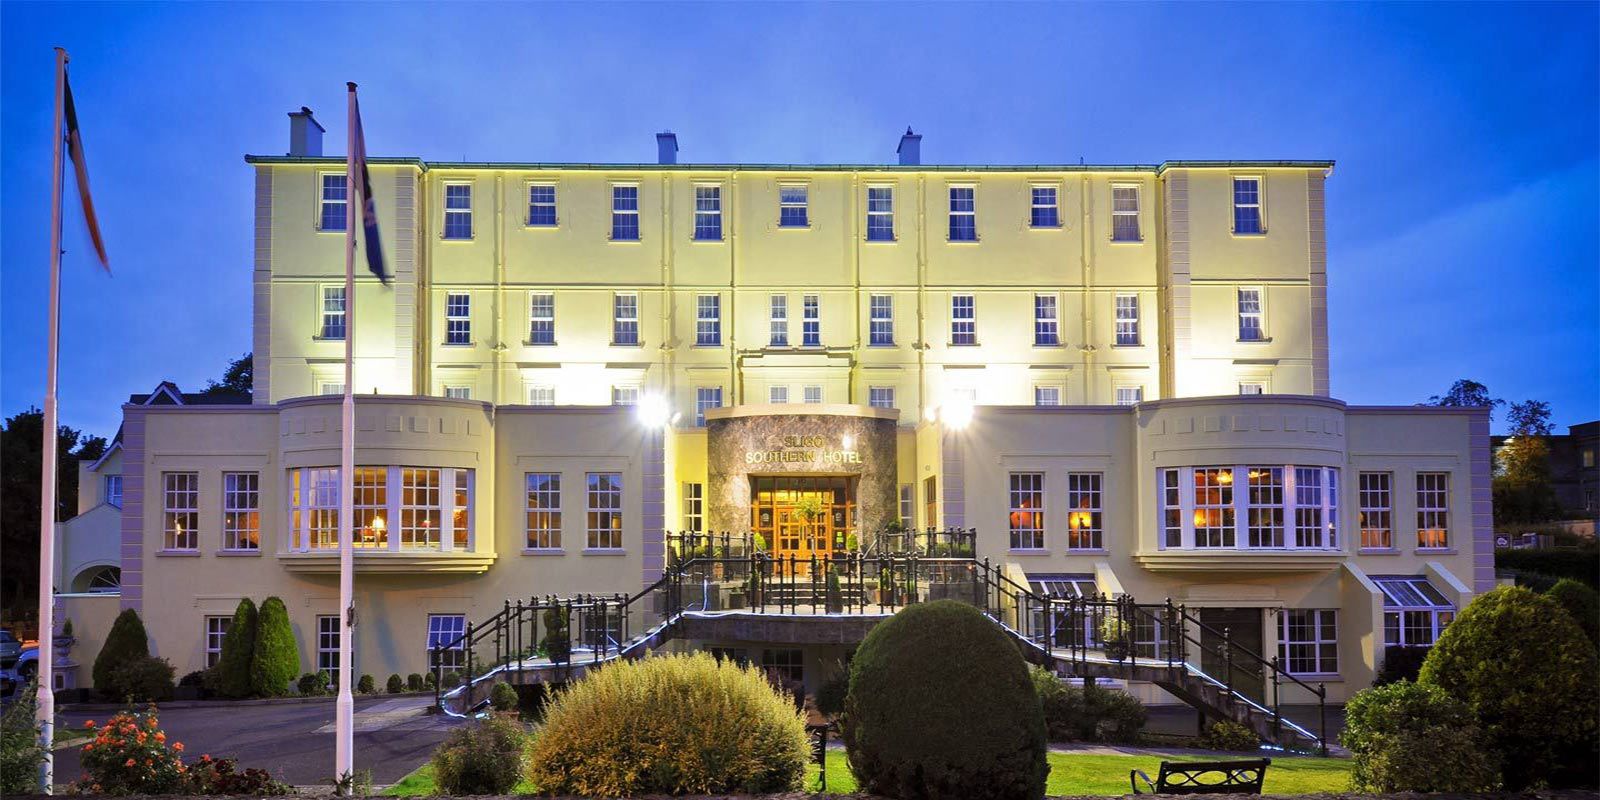 Town Centre 4 star hotel in Sligo